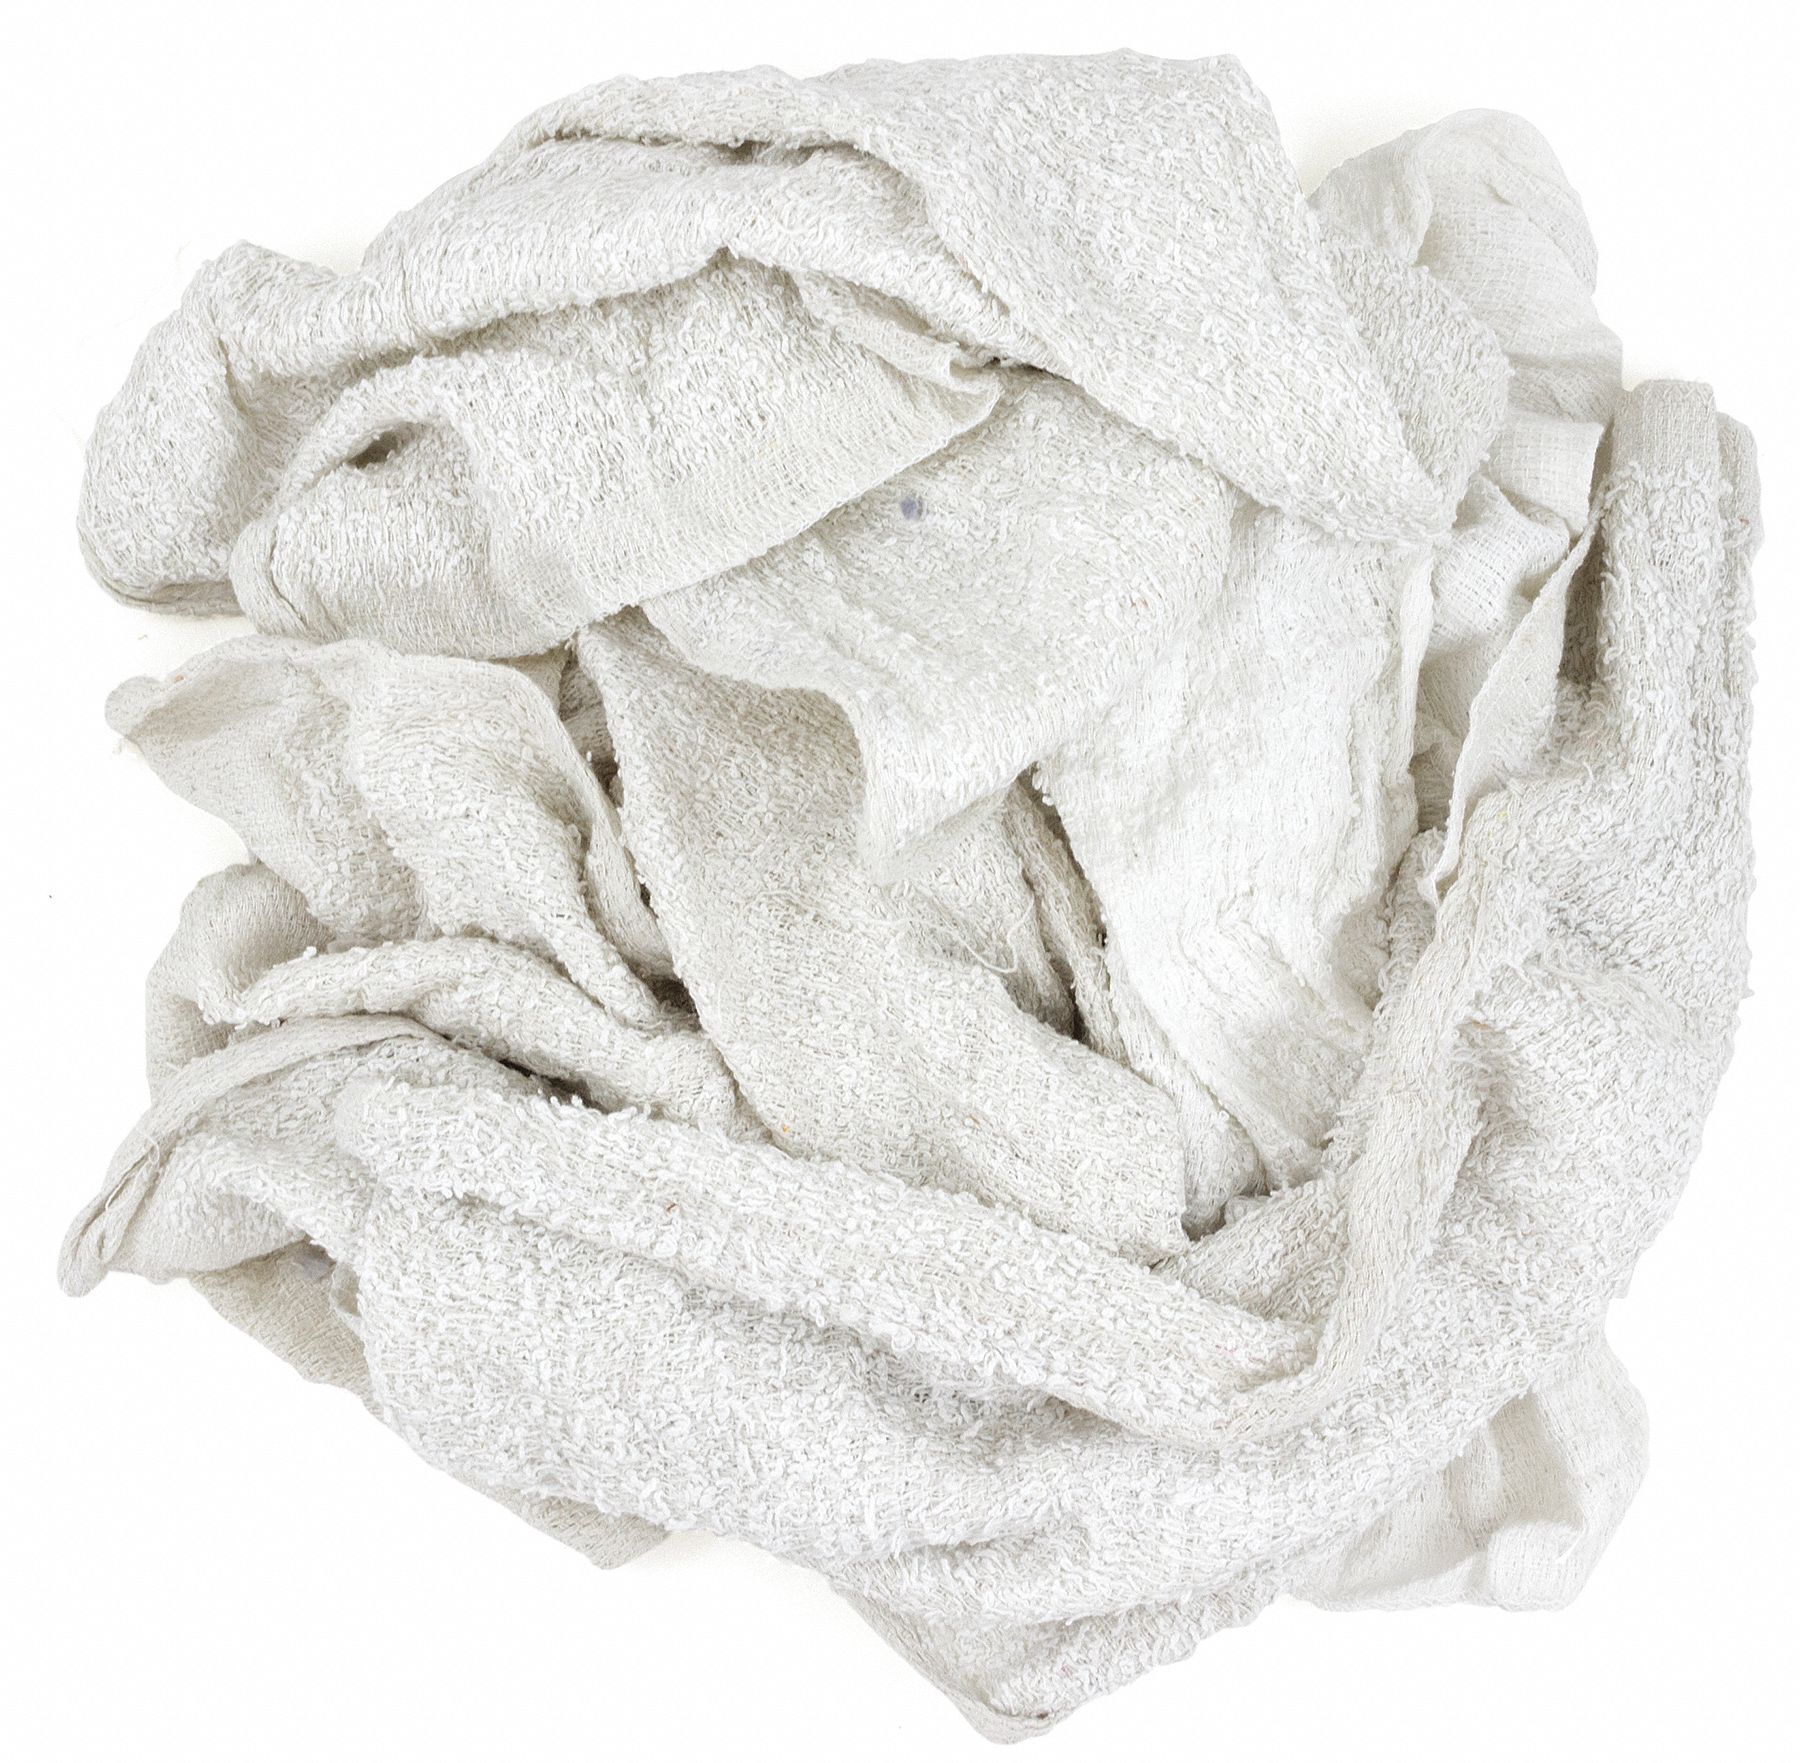 GRAINGER APPROVED Cloth Rag, Terry Cloth, White, Varies, 25 lb - 3U588 ...